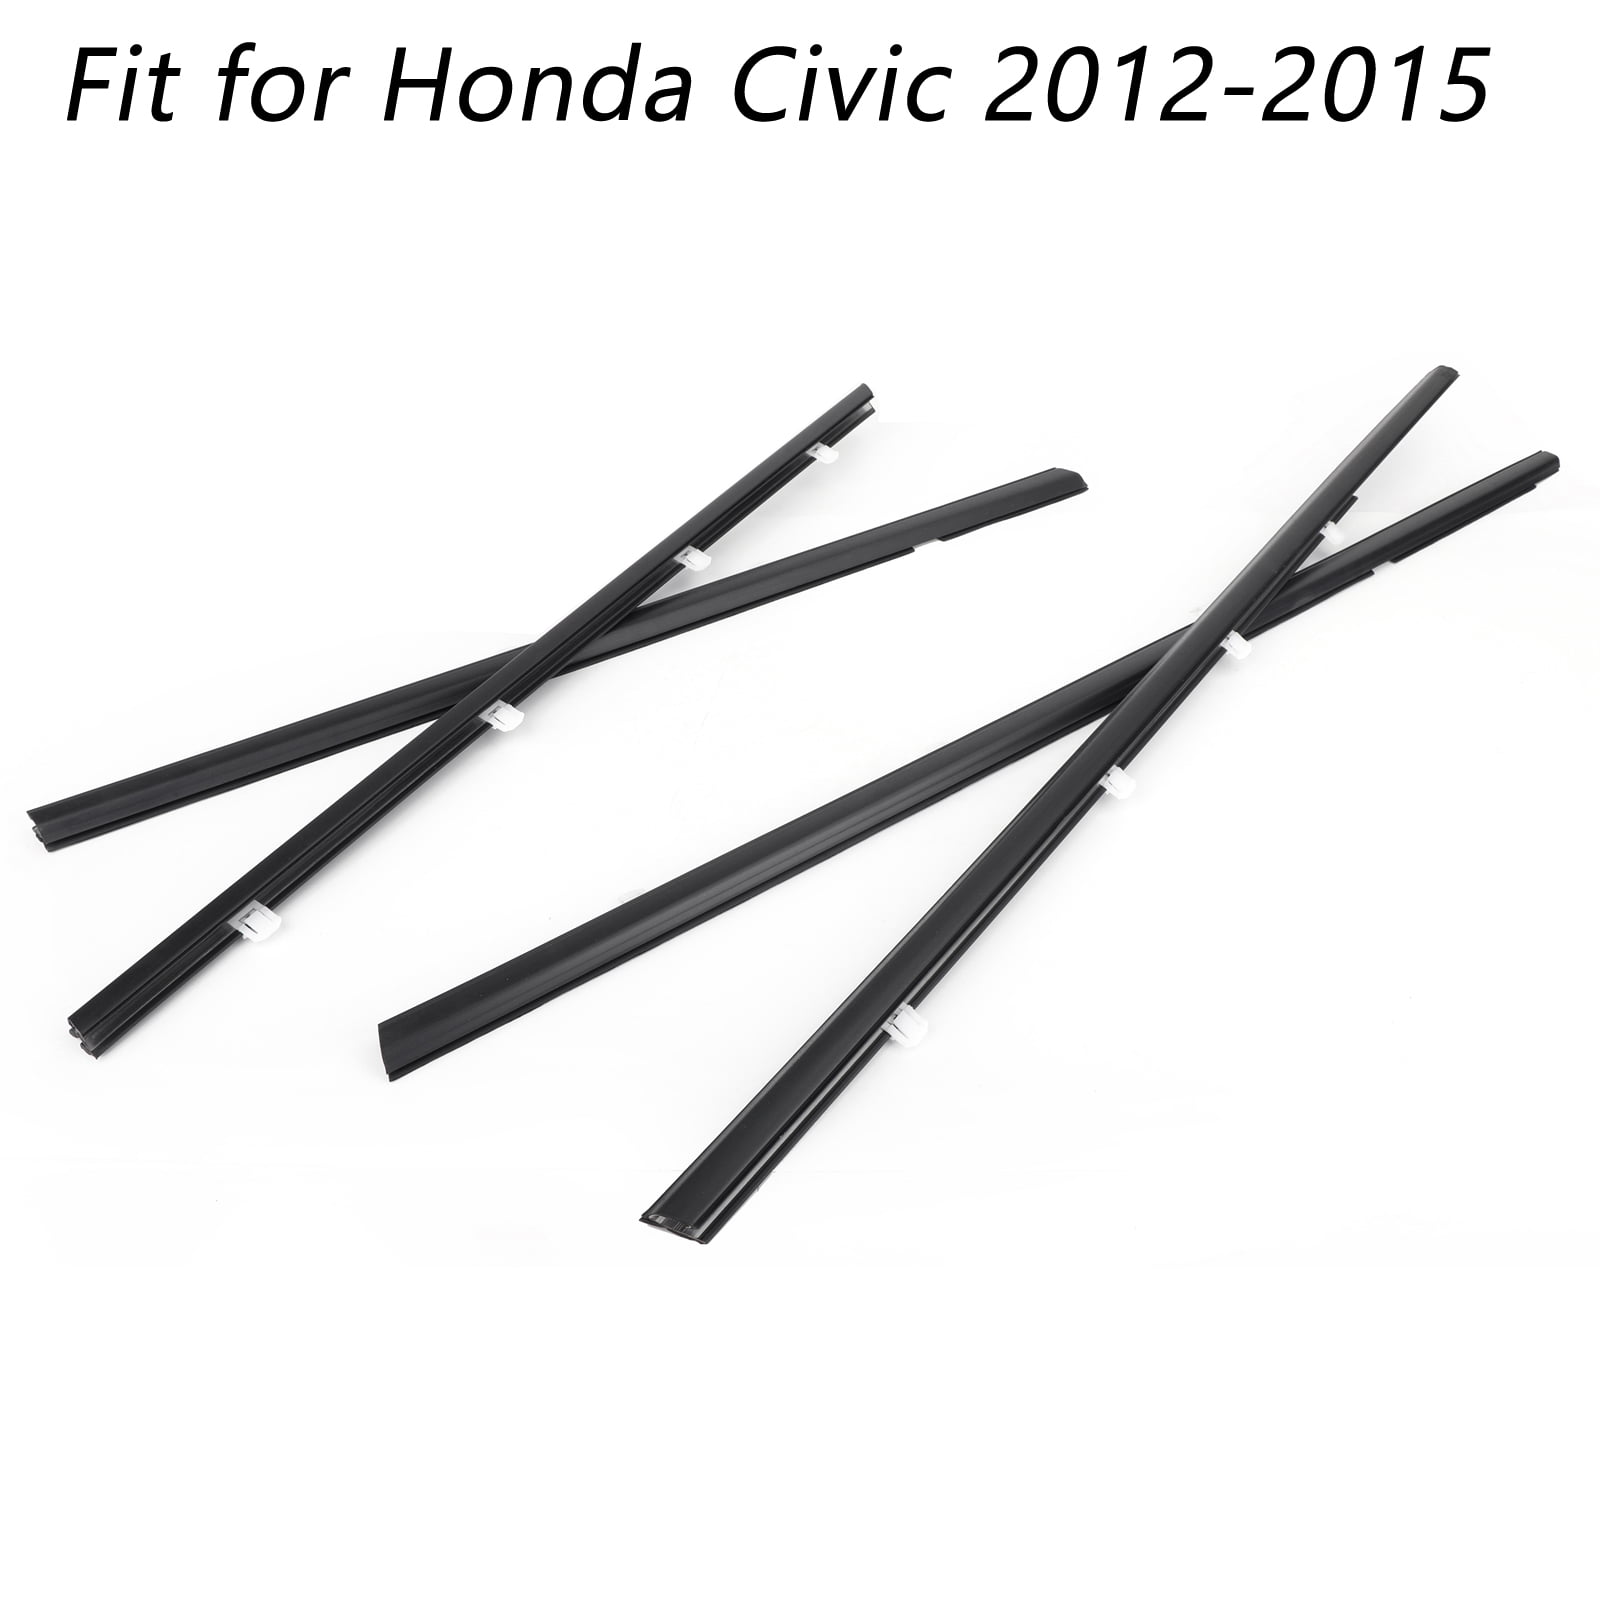 4pcs Car Weatherstrip Window Moulding Trim Seal Belt For Honda Civic 2012-2015